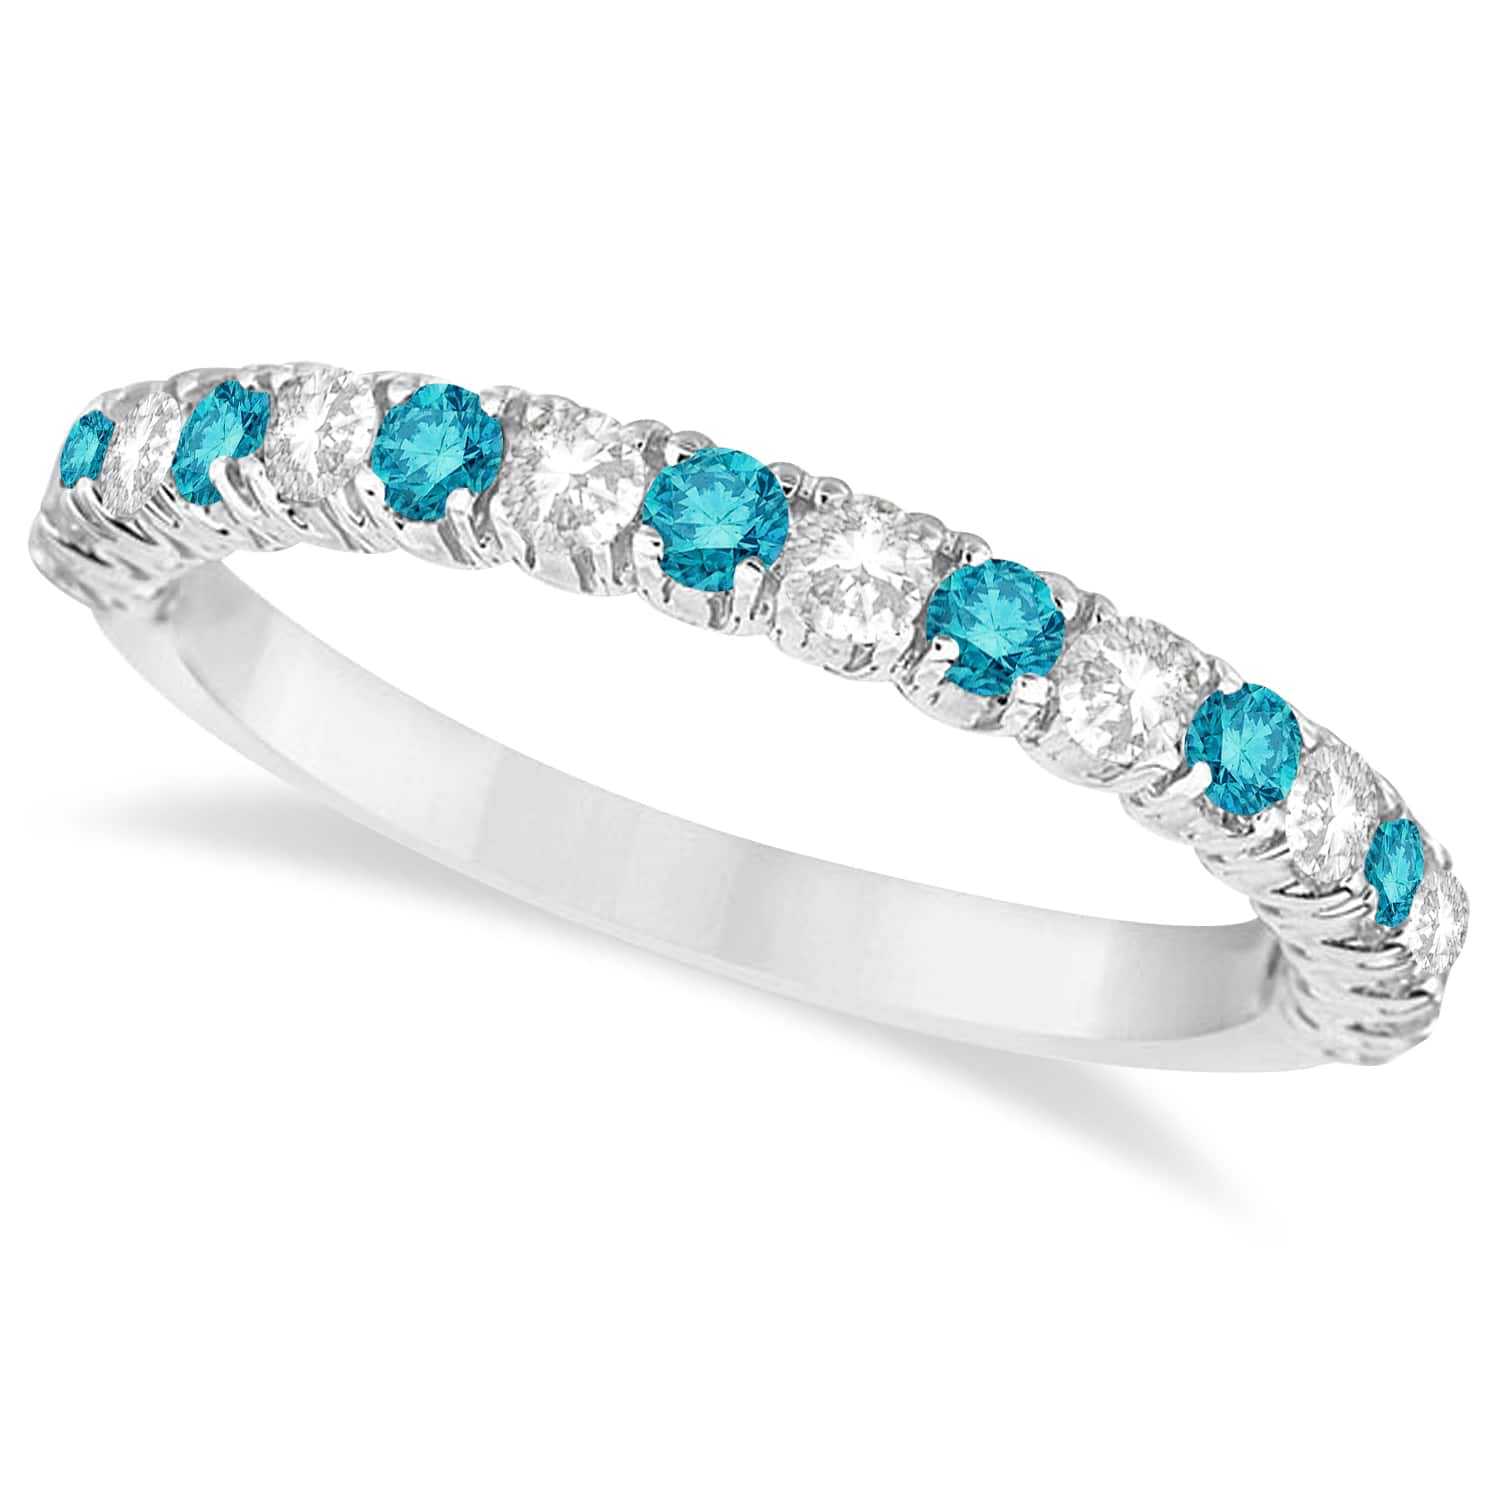 Blue & White Diamond Wedding Band Anniversary Ring in 14k White Gold (0.75ct)